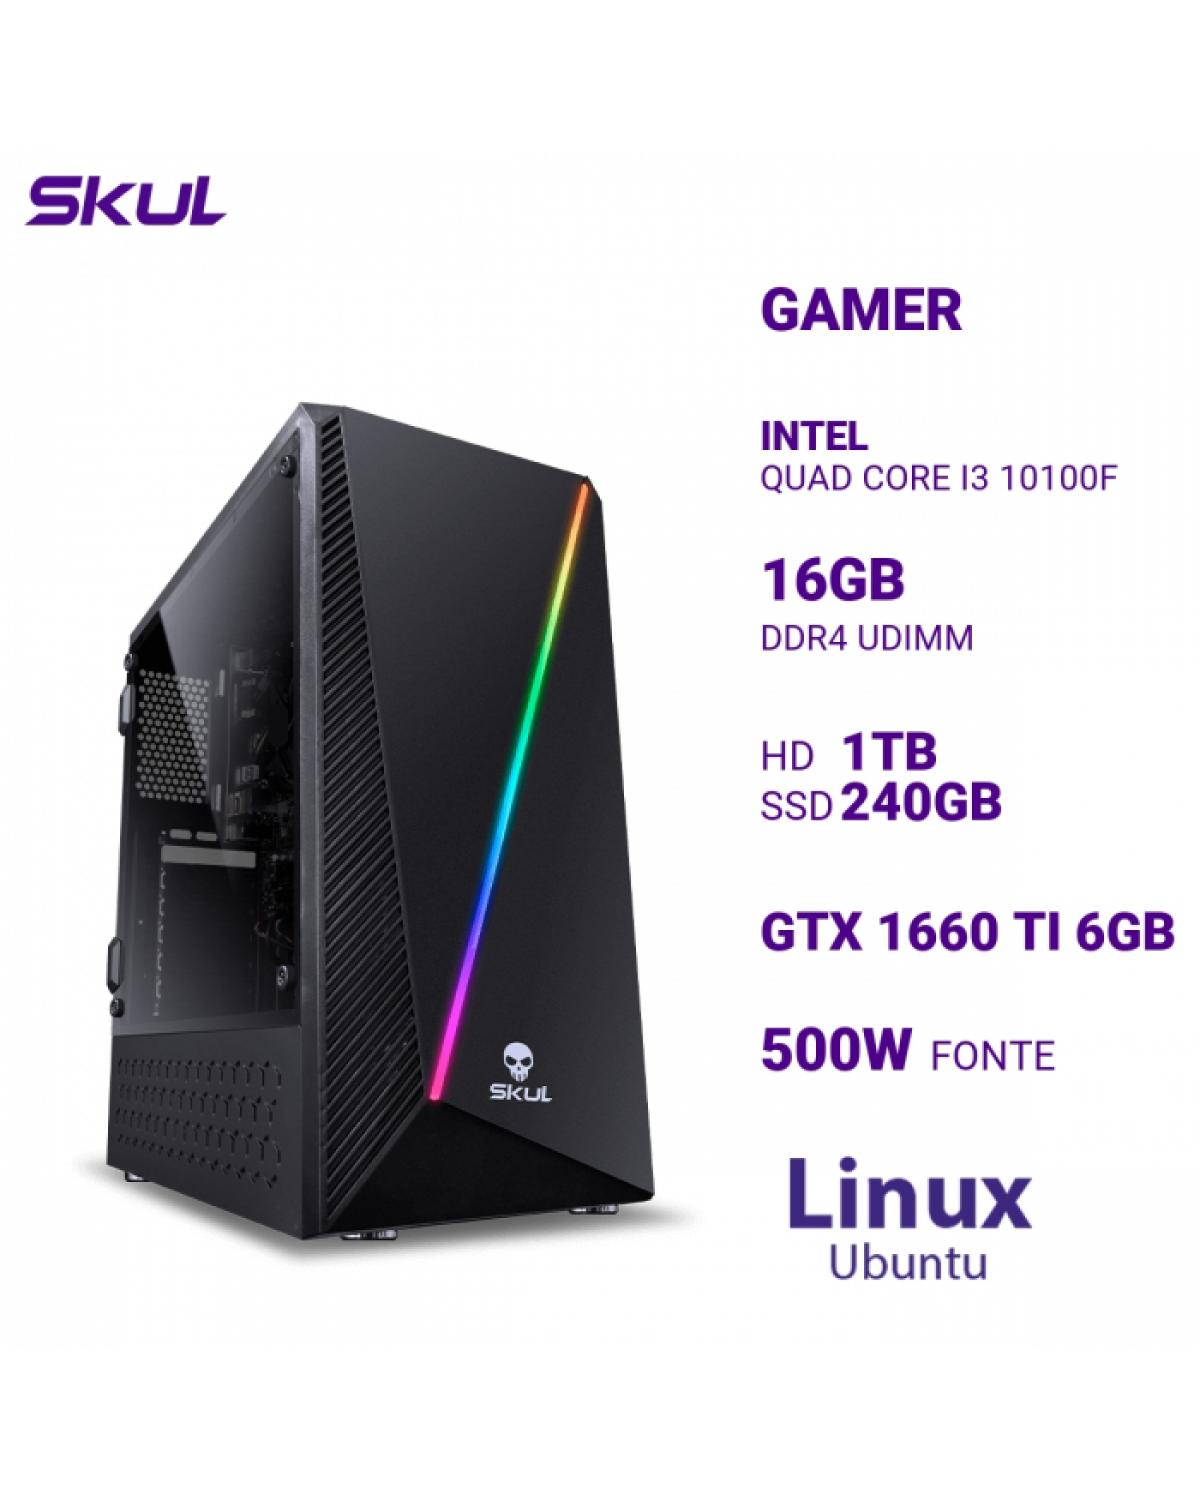 COMPUTADOR GAMER 3000 QUAD CORE I3 10100F MEM 16GB DDR4 HD 1TB SSD 240GB NVME GTX 1660 TI 6GB FONTE 500W LINUX